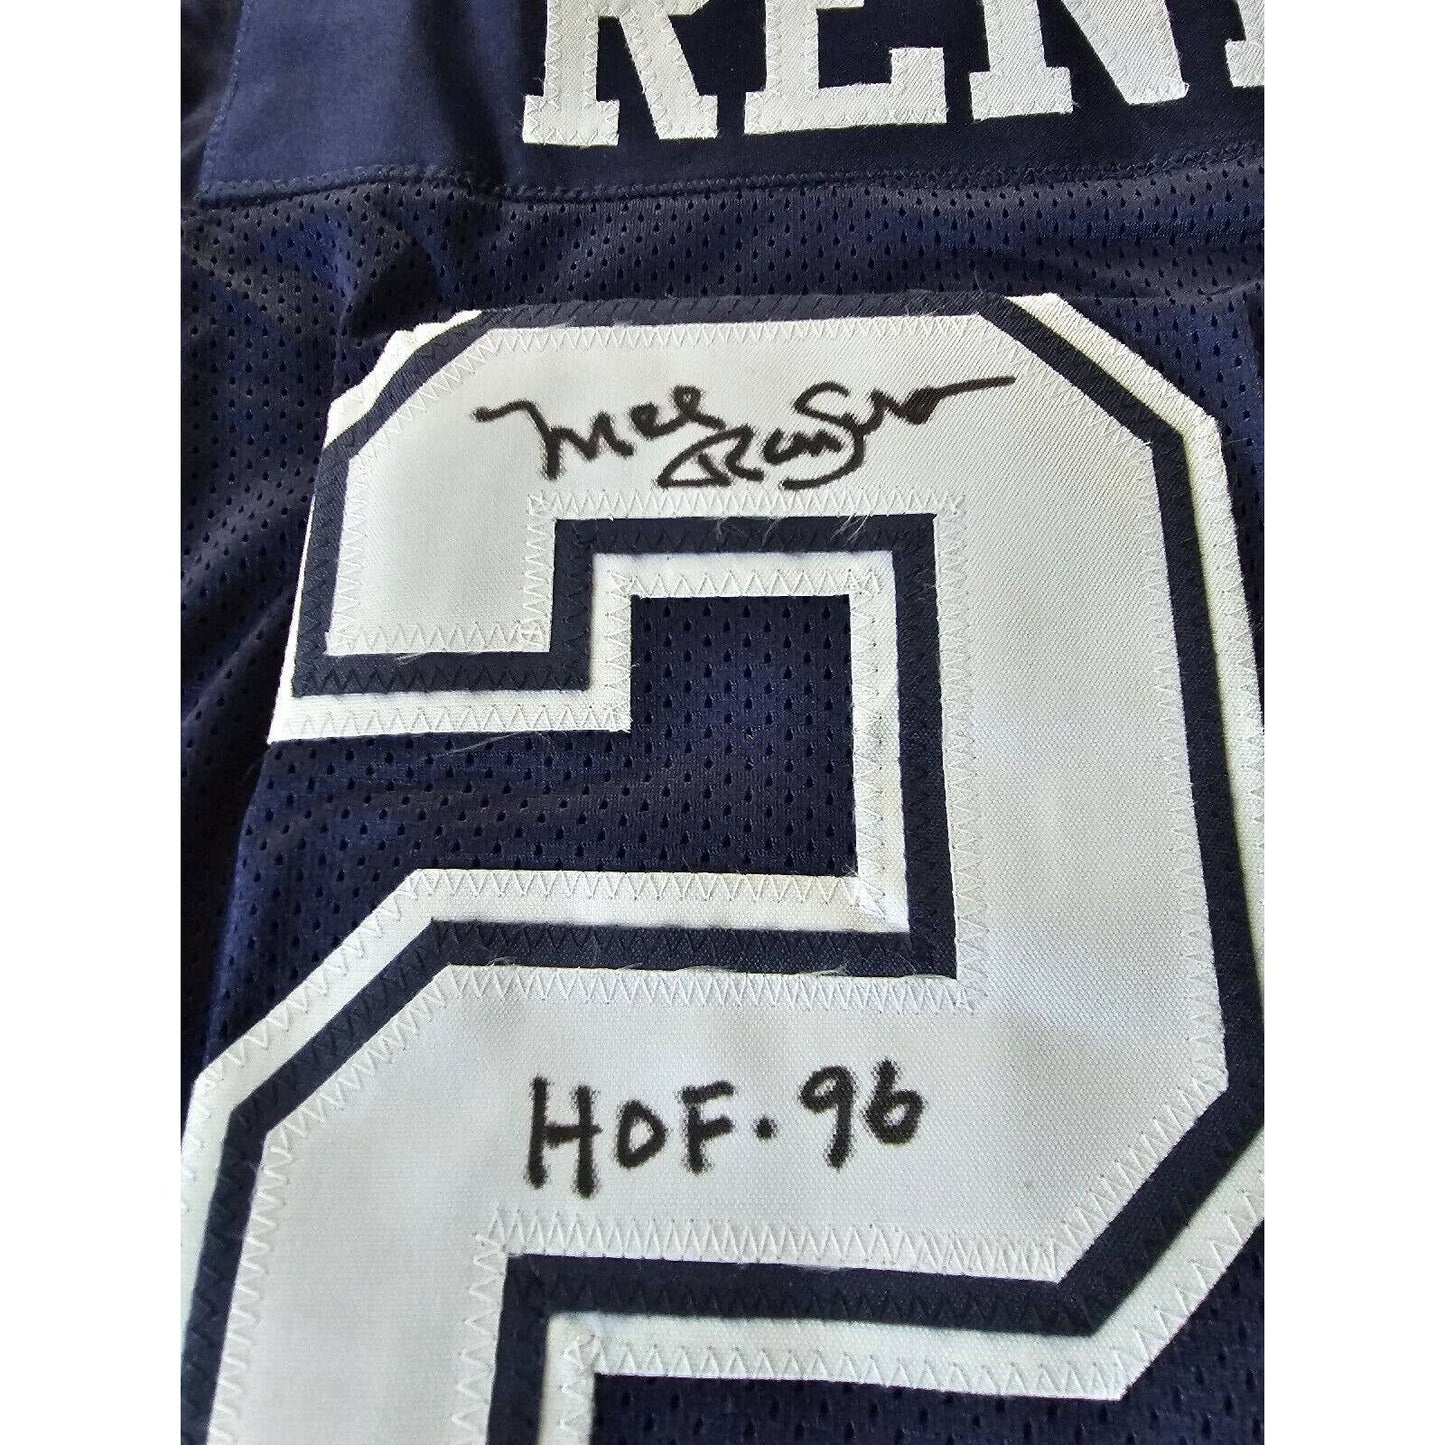 Mel Renfro Autographed/Signed Jersey Dallas Cowboys HOF